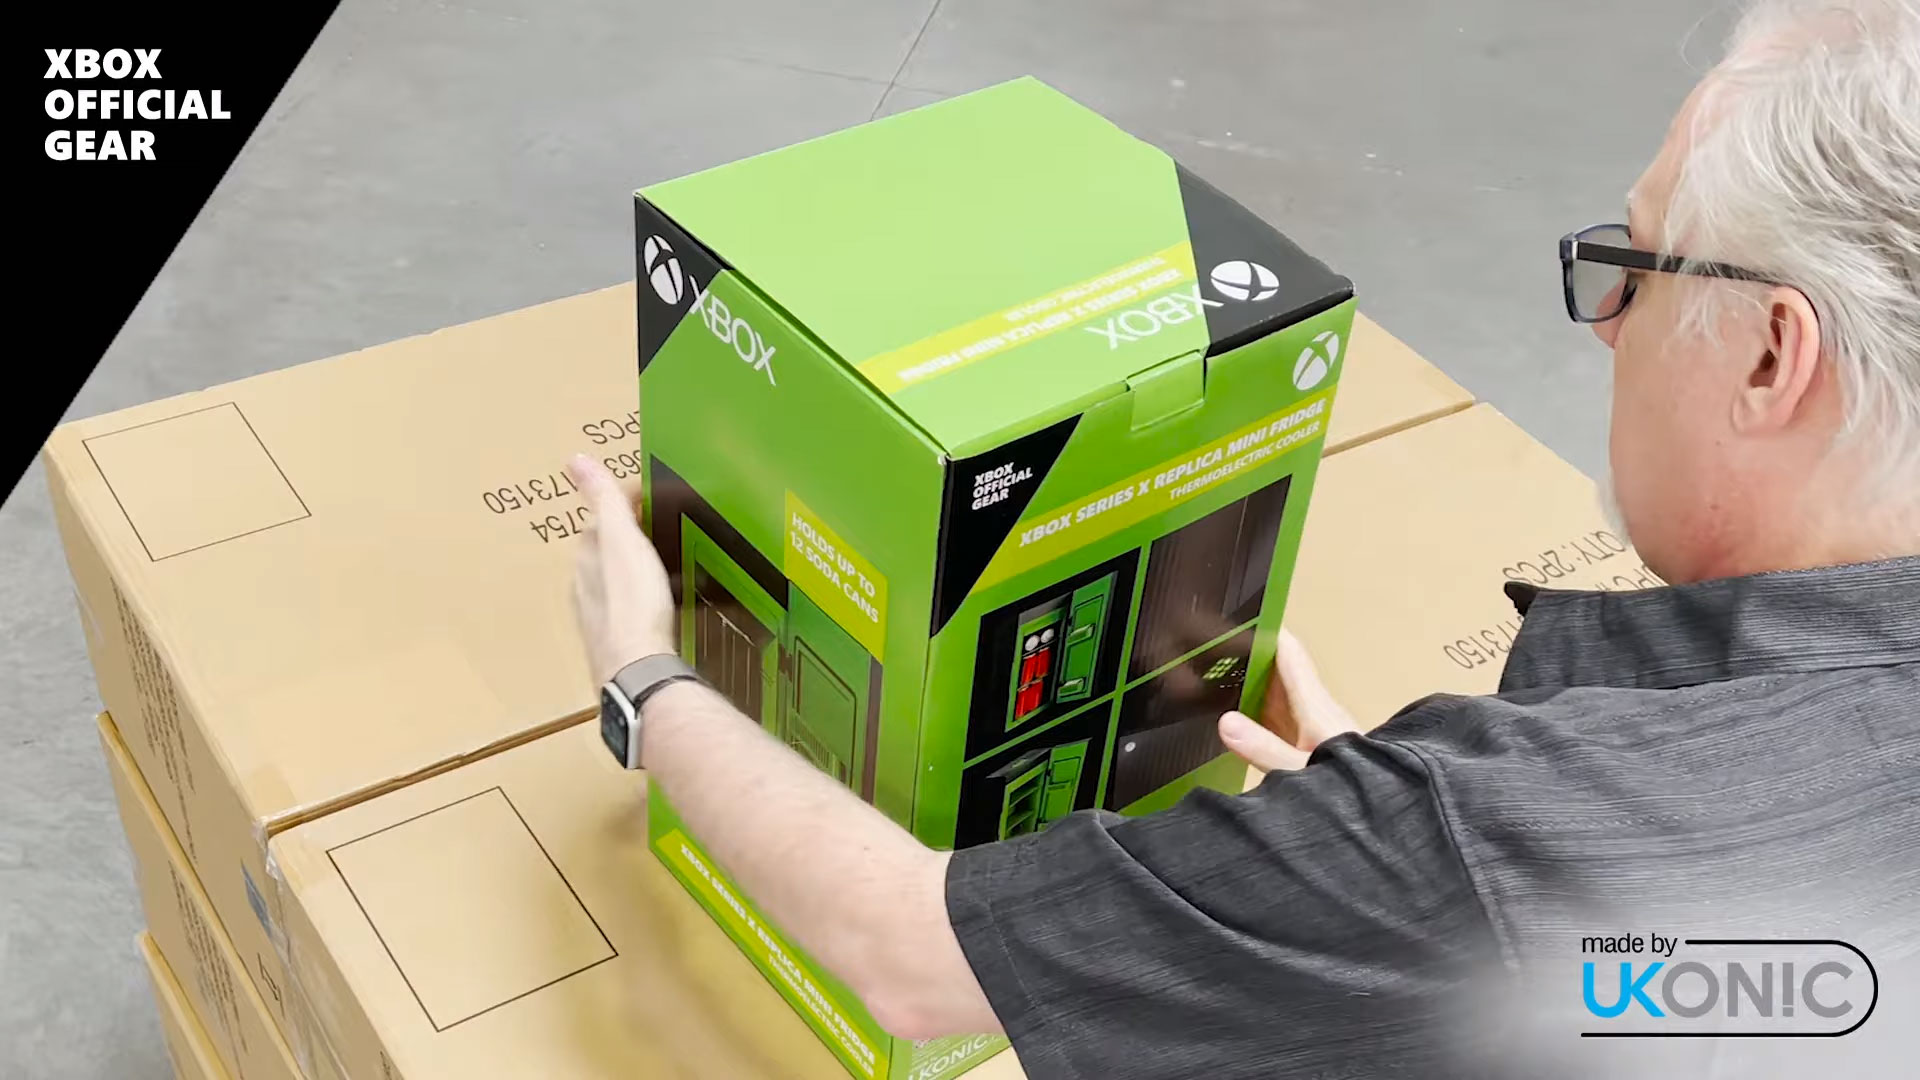 Voici le MINI FRIGO Xbox Series X ❄️ Unboxing glacé ❄️